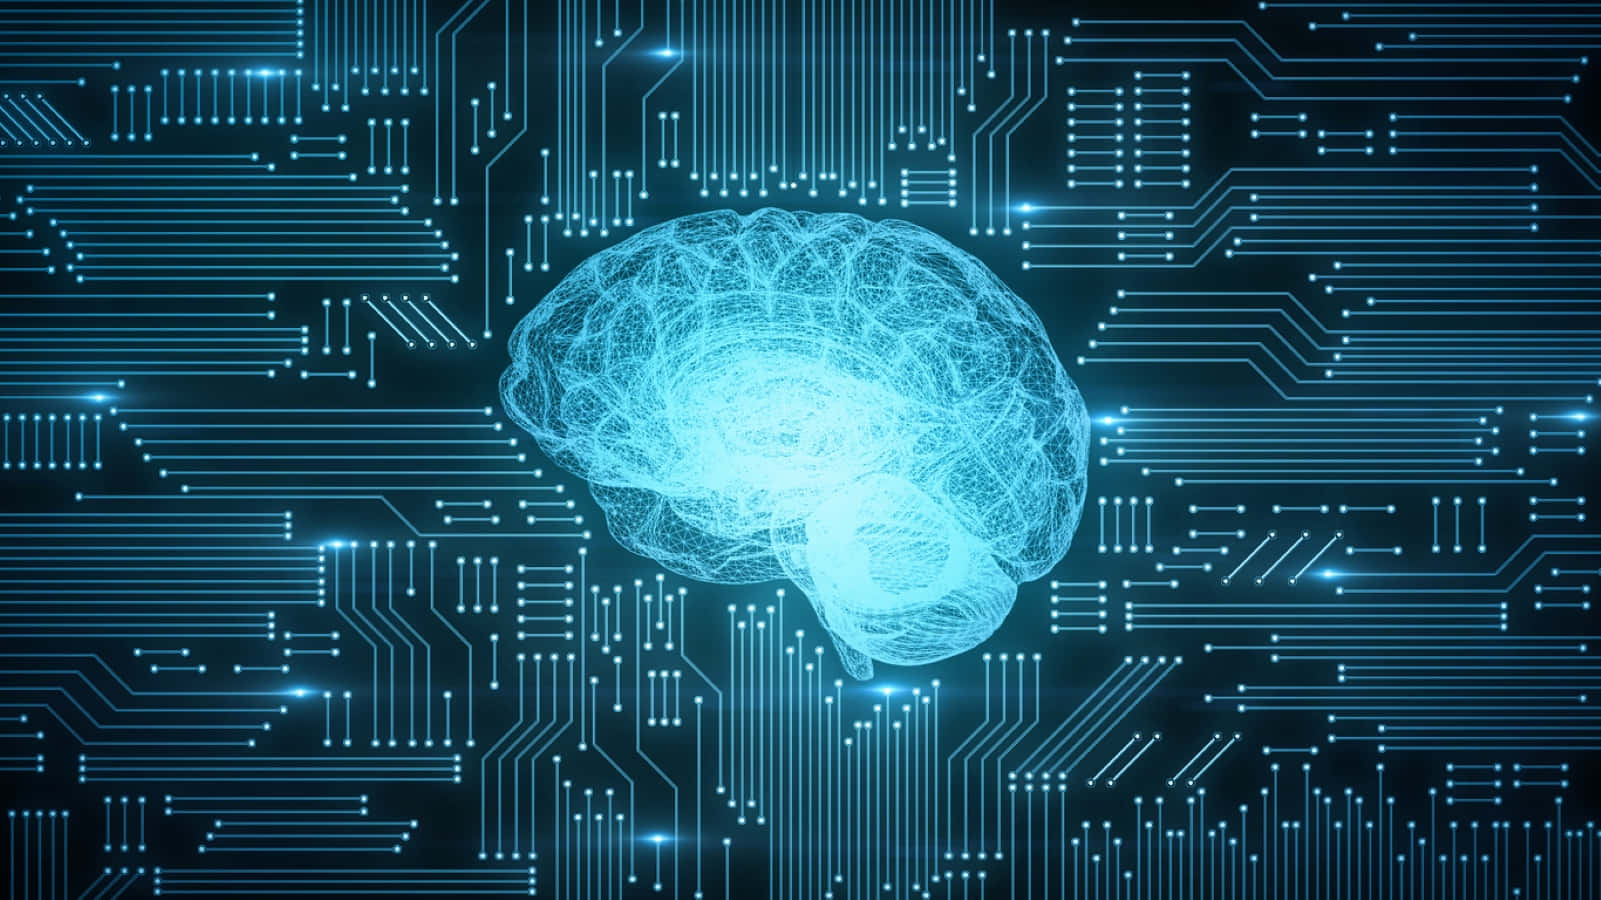 Artificial Intelligence In A Futuristic Digital World. Background